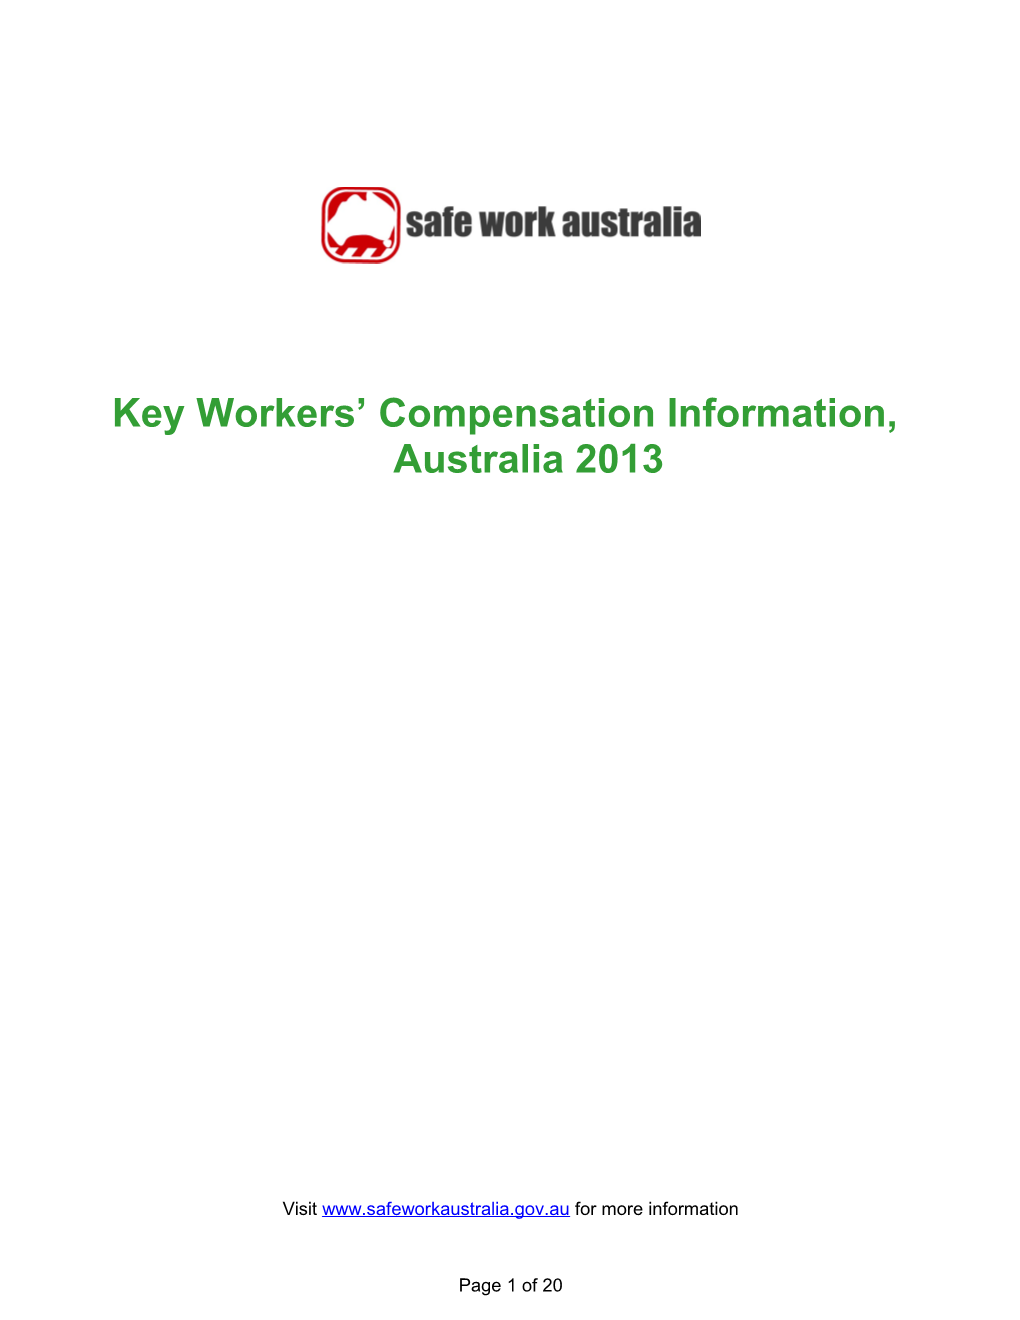 Key Workers' Compensation Information, Australia 2013